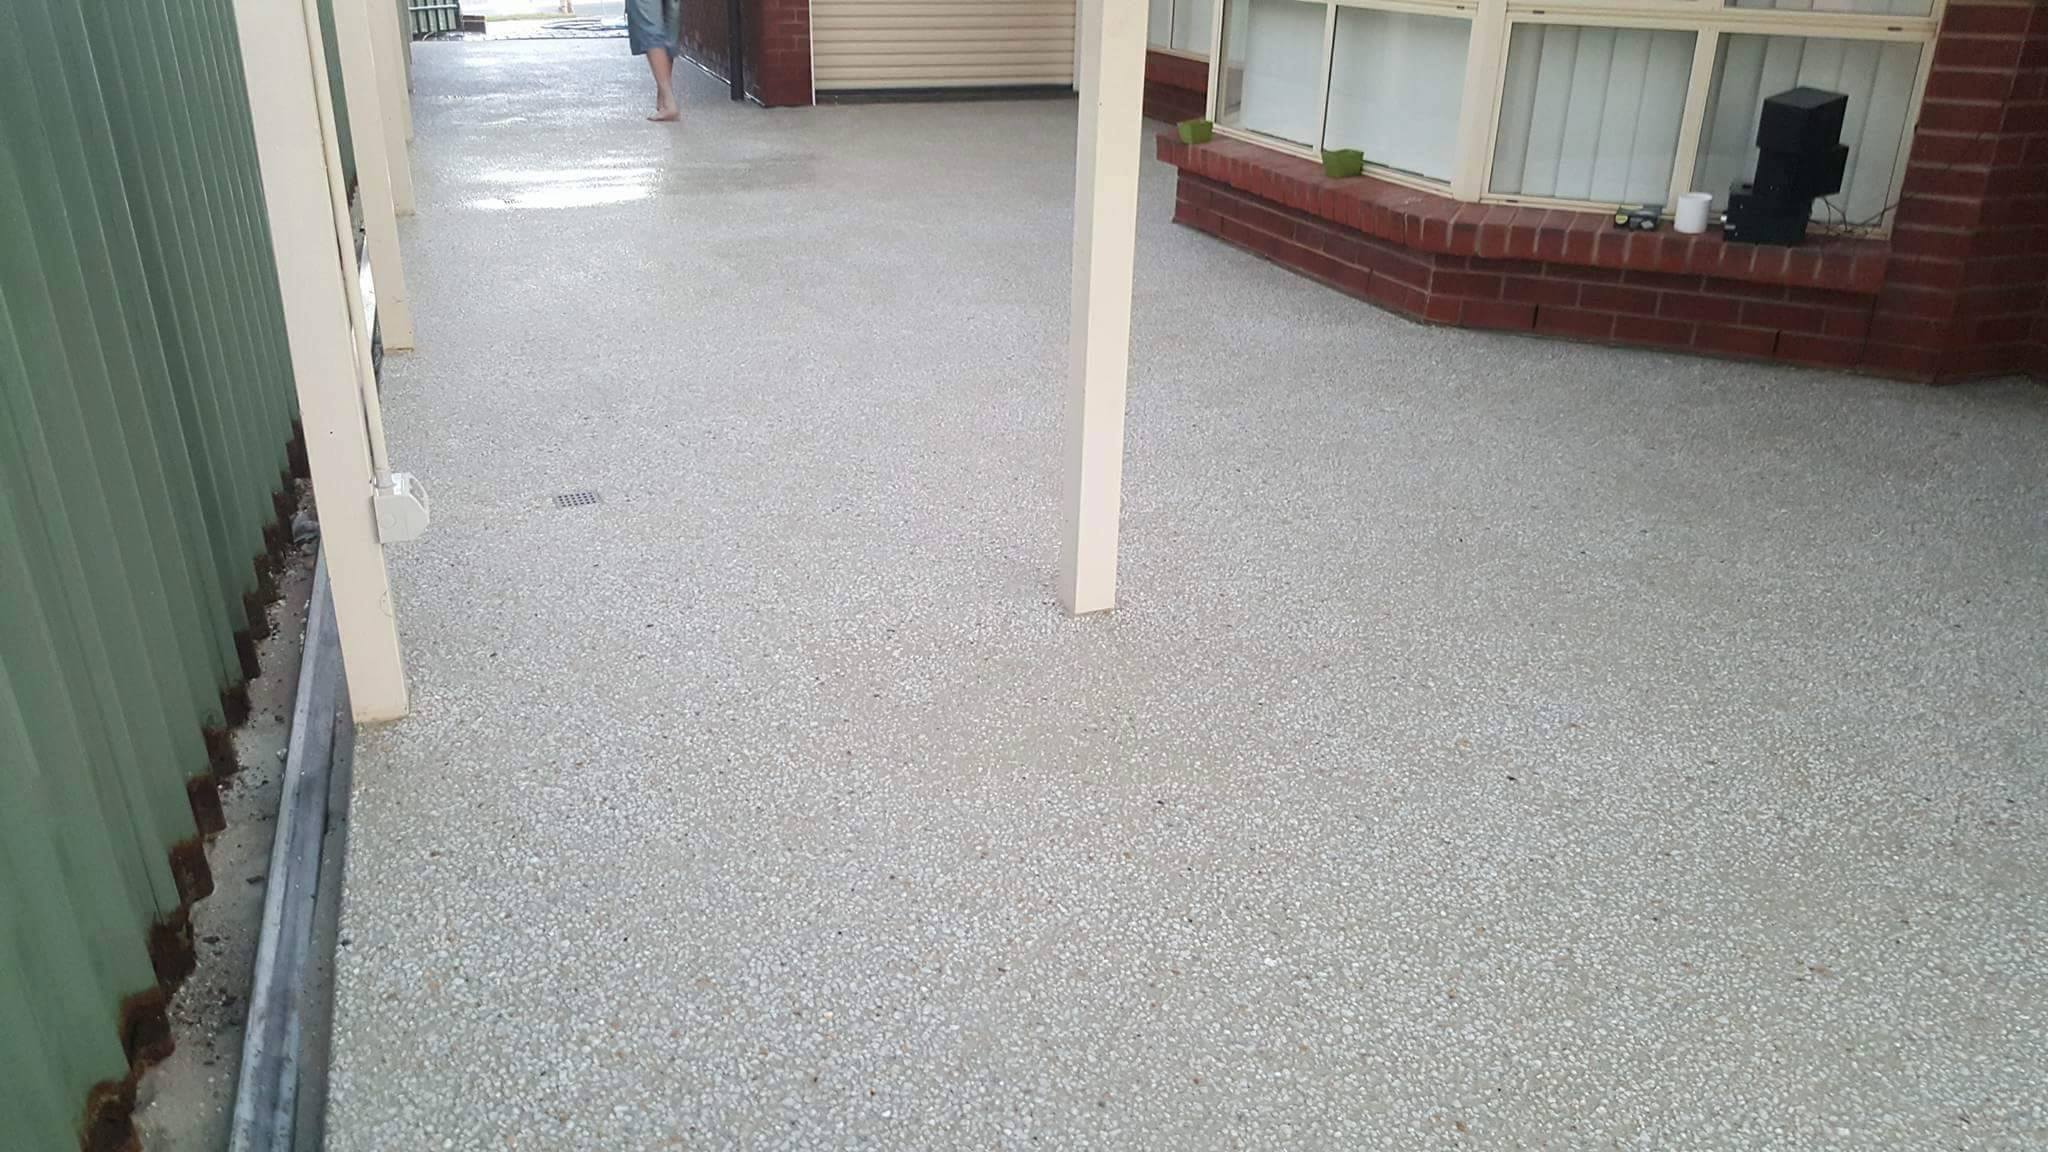 Install concrete flooring to improve beauty